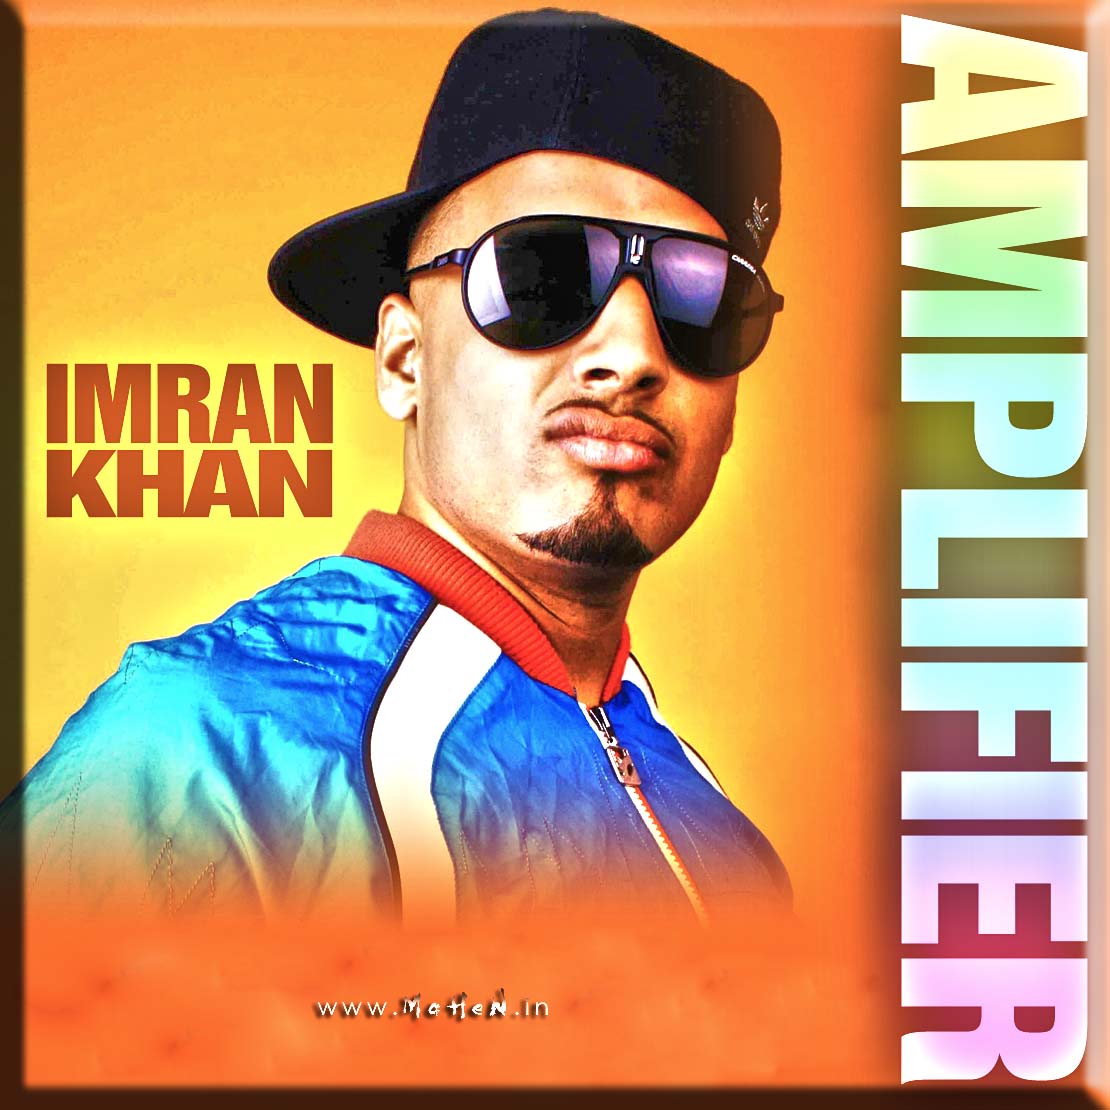 imran khan amplifier official song mp3 download